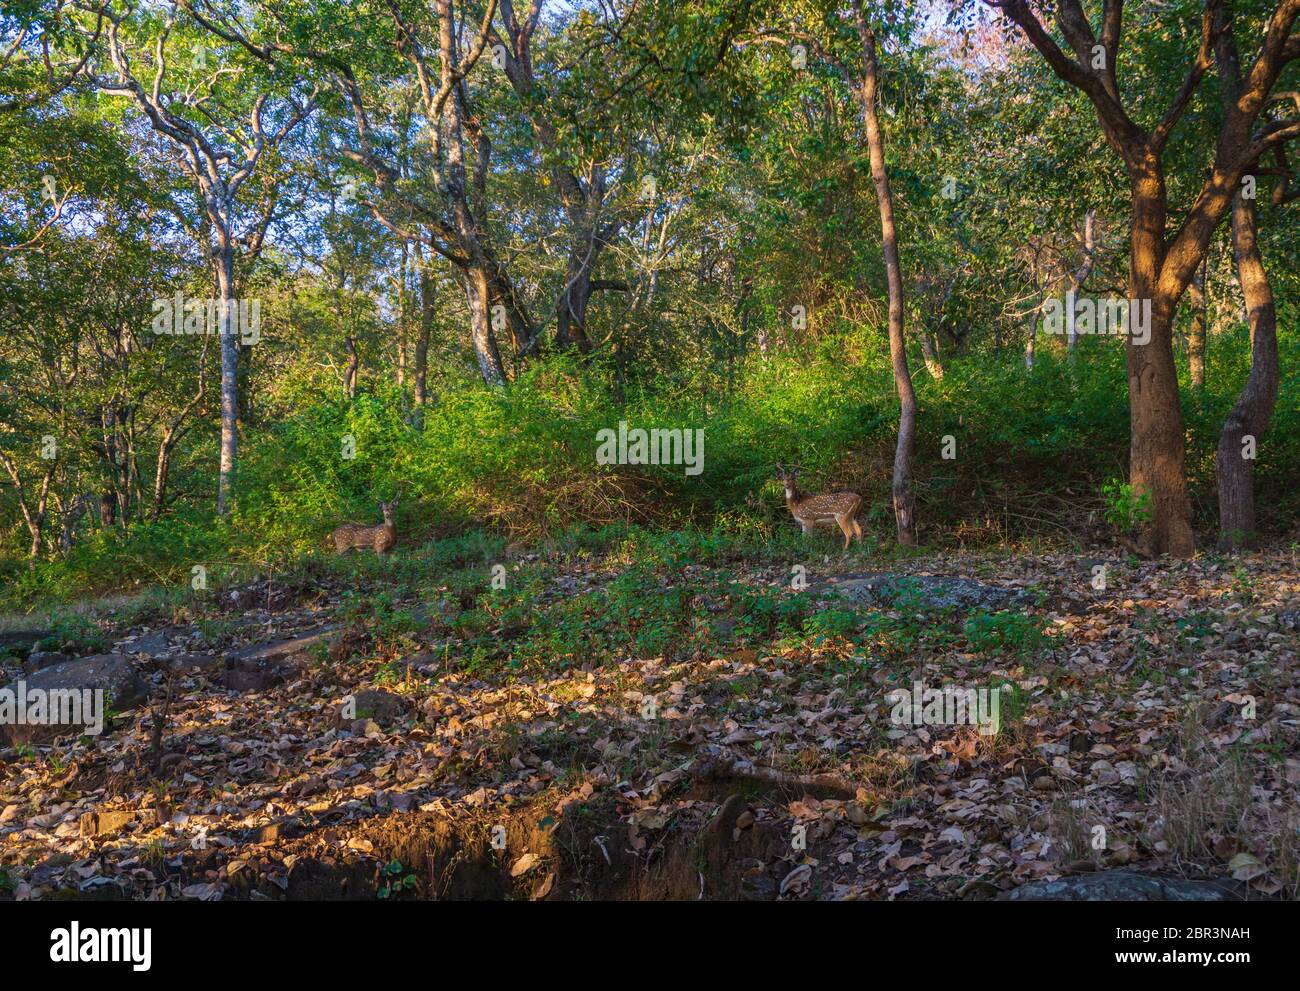 Spotted Deers grazing in BR Hills Sanctuary, Karnataka, India Stock Photo